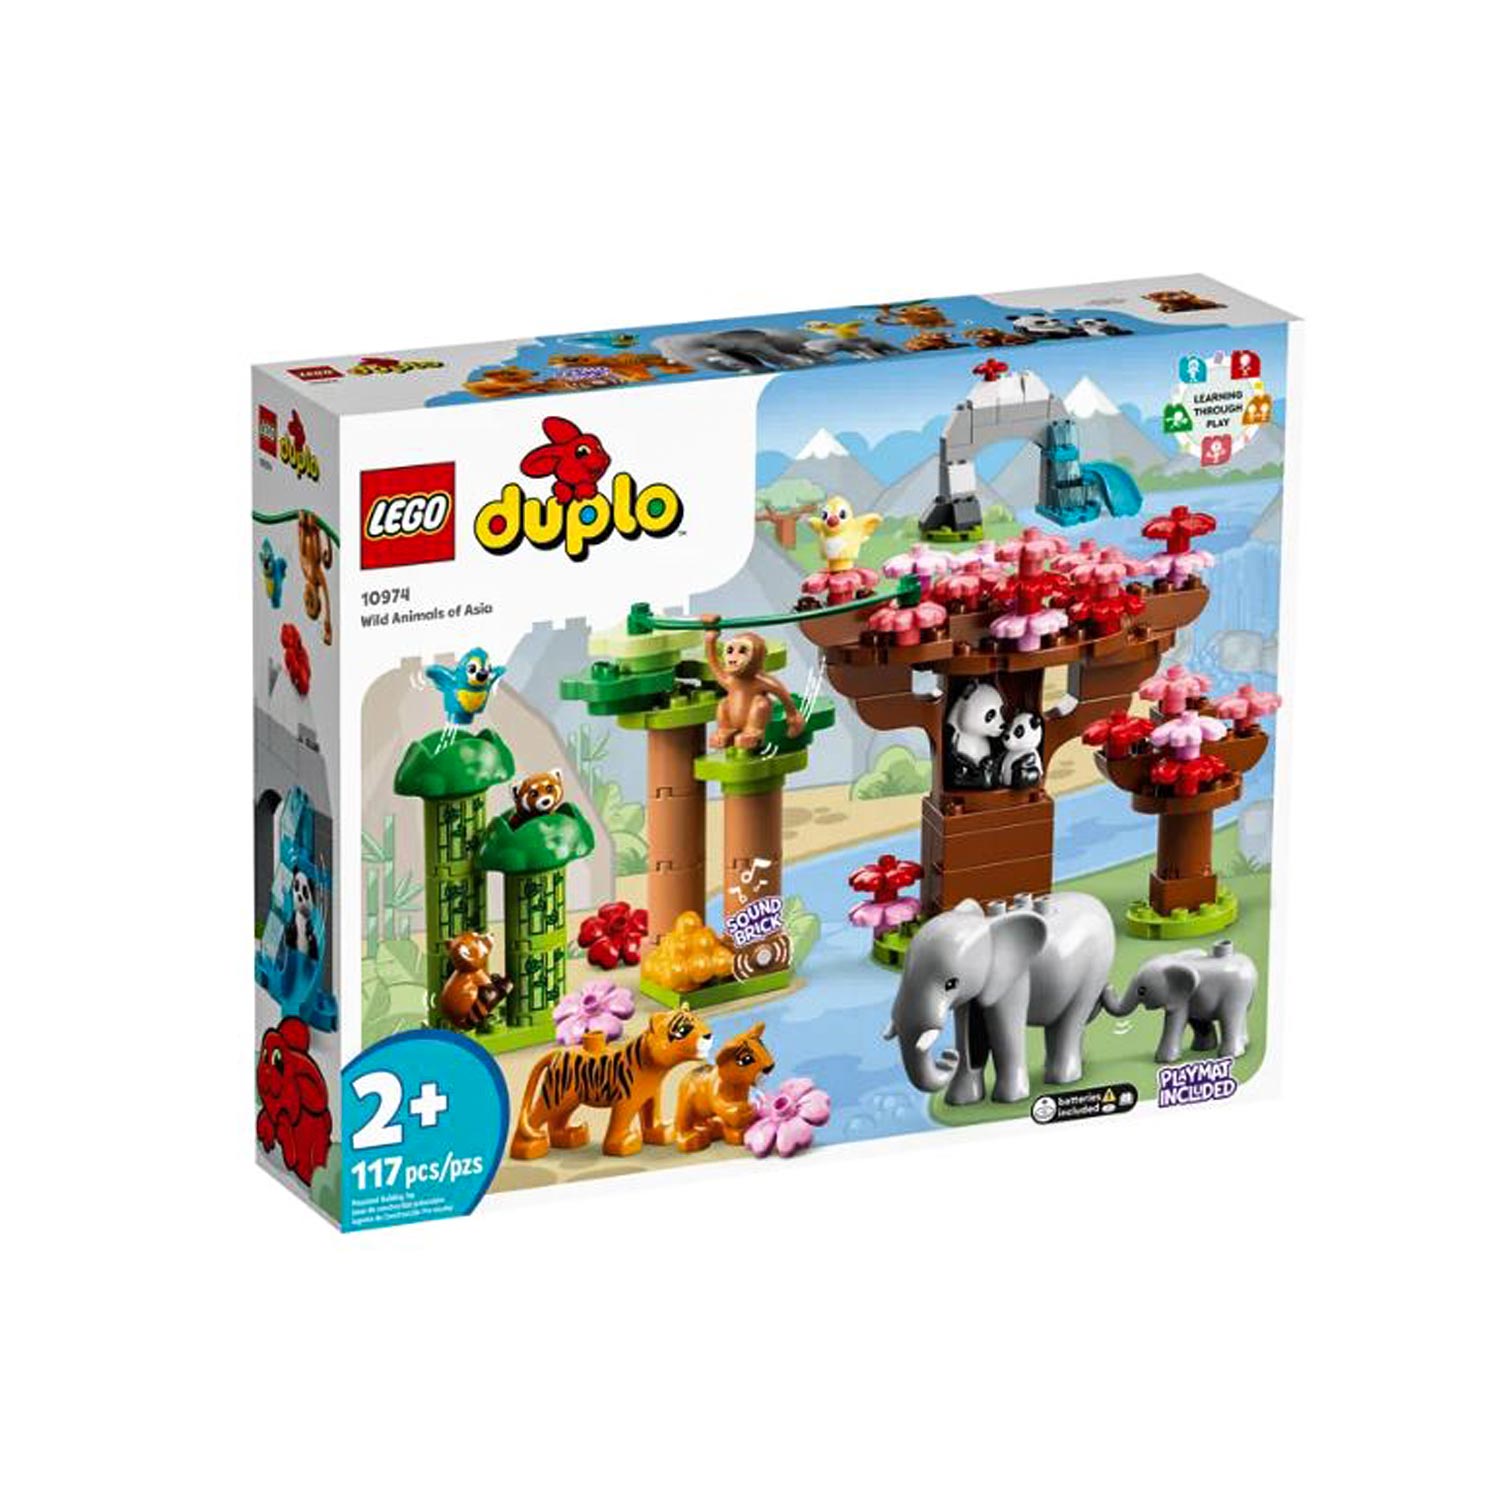 LEGO Duplo - 10975 Wild Animals of The World